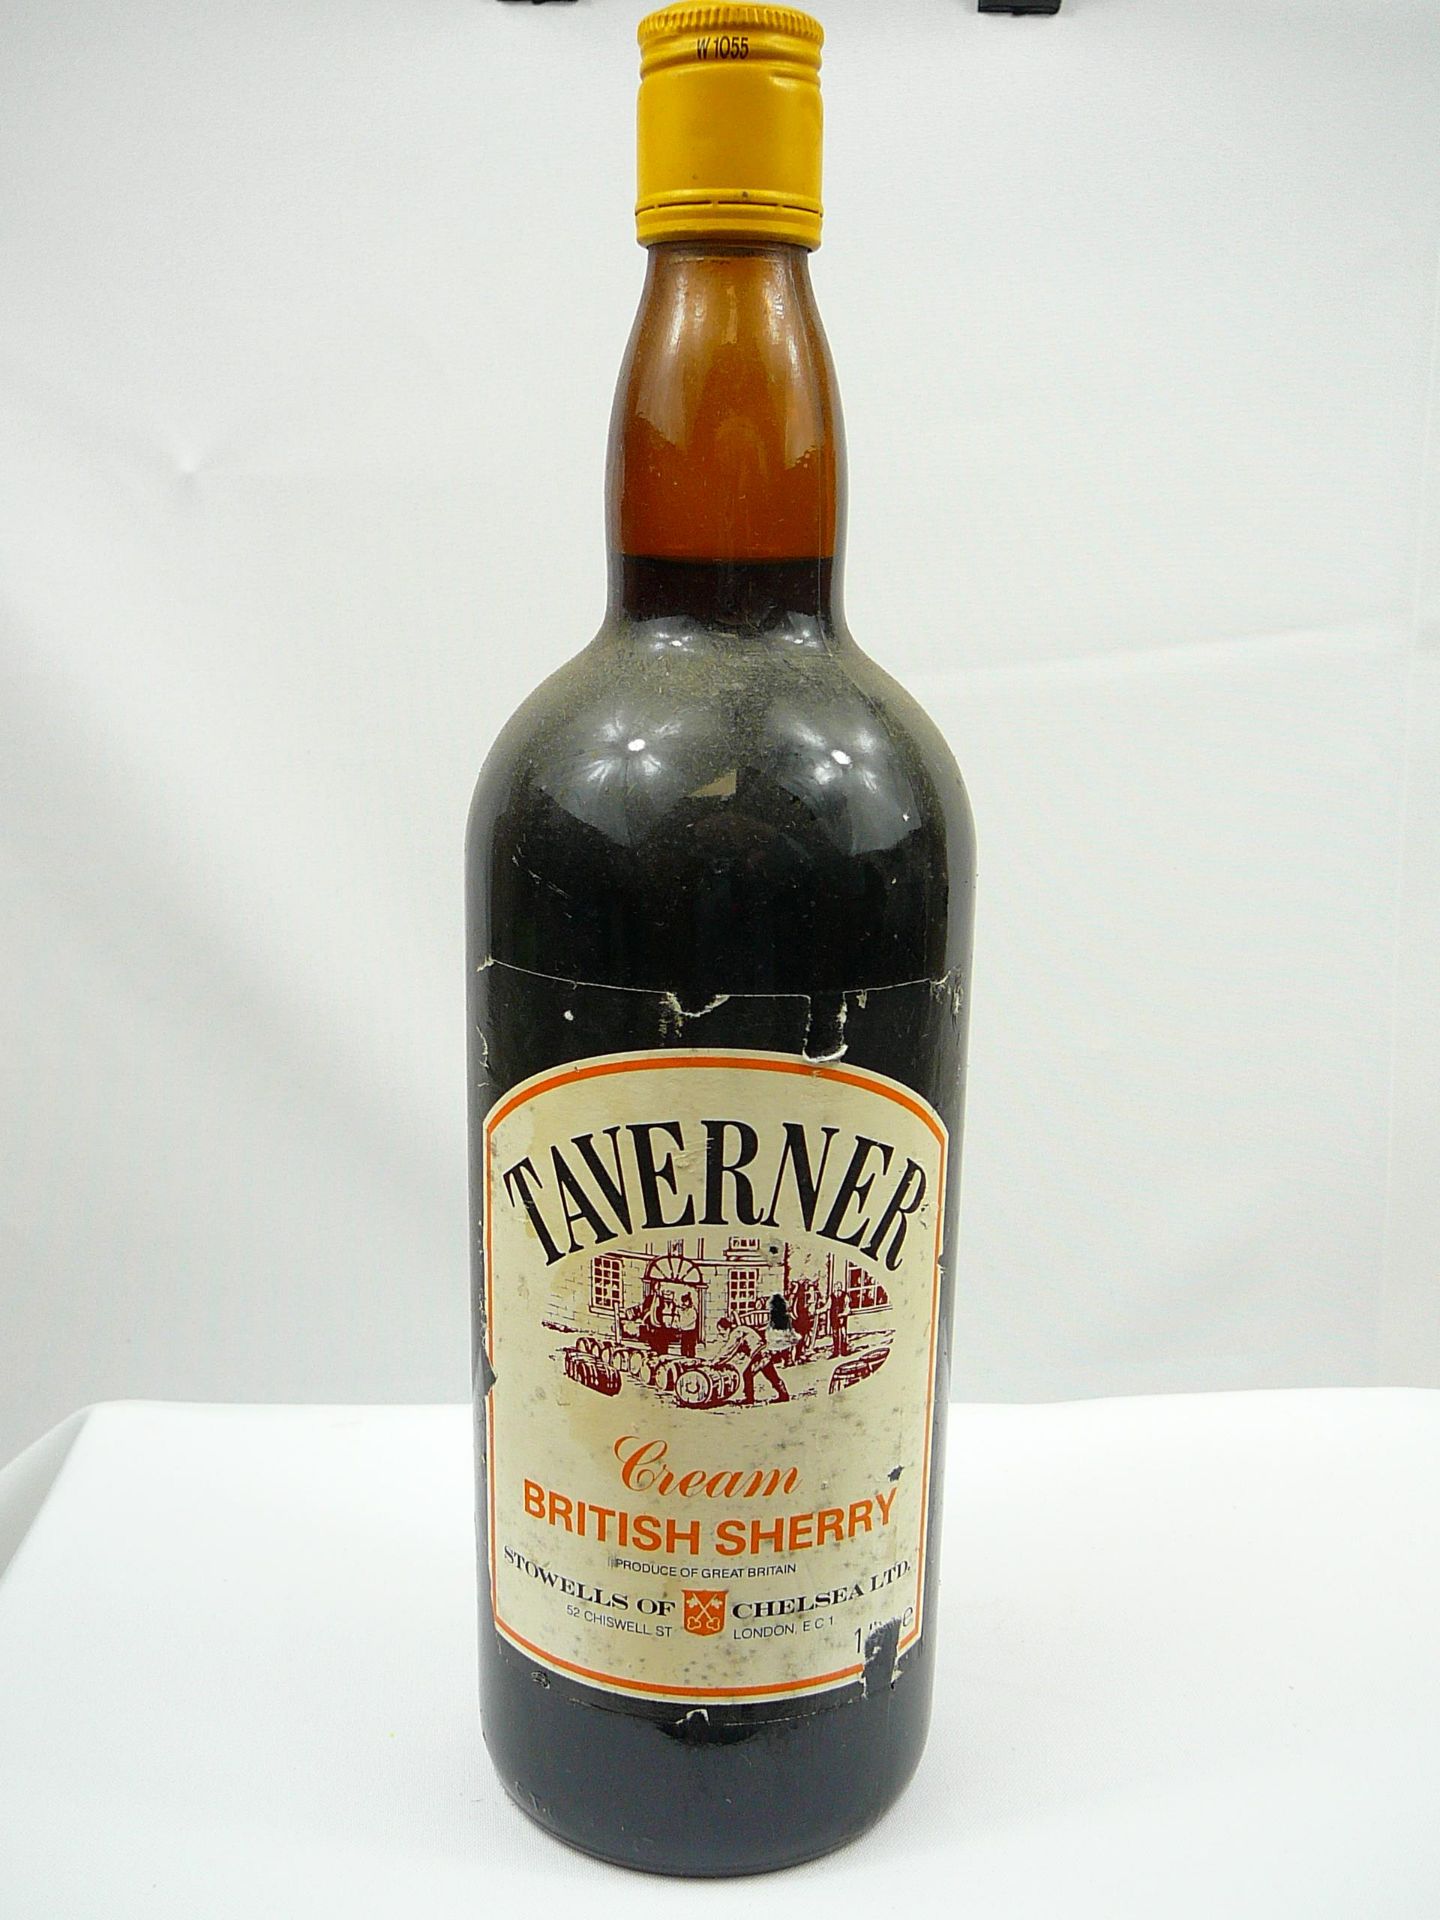 Vintage Taverners Sherry